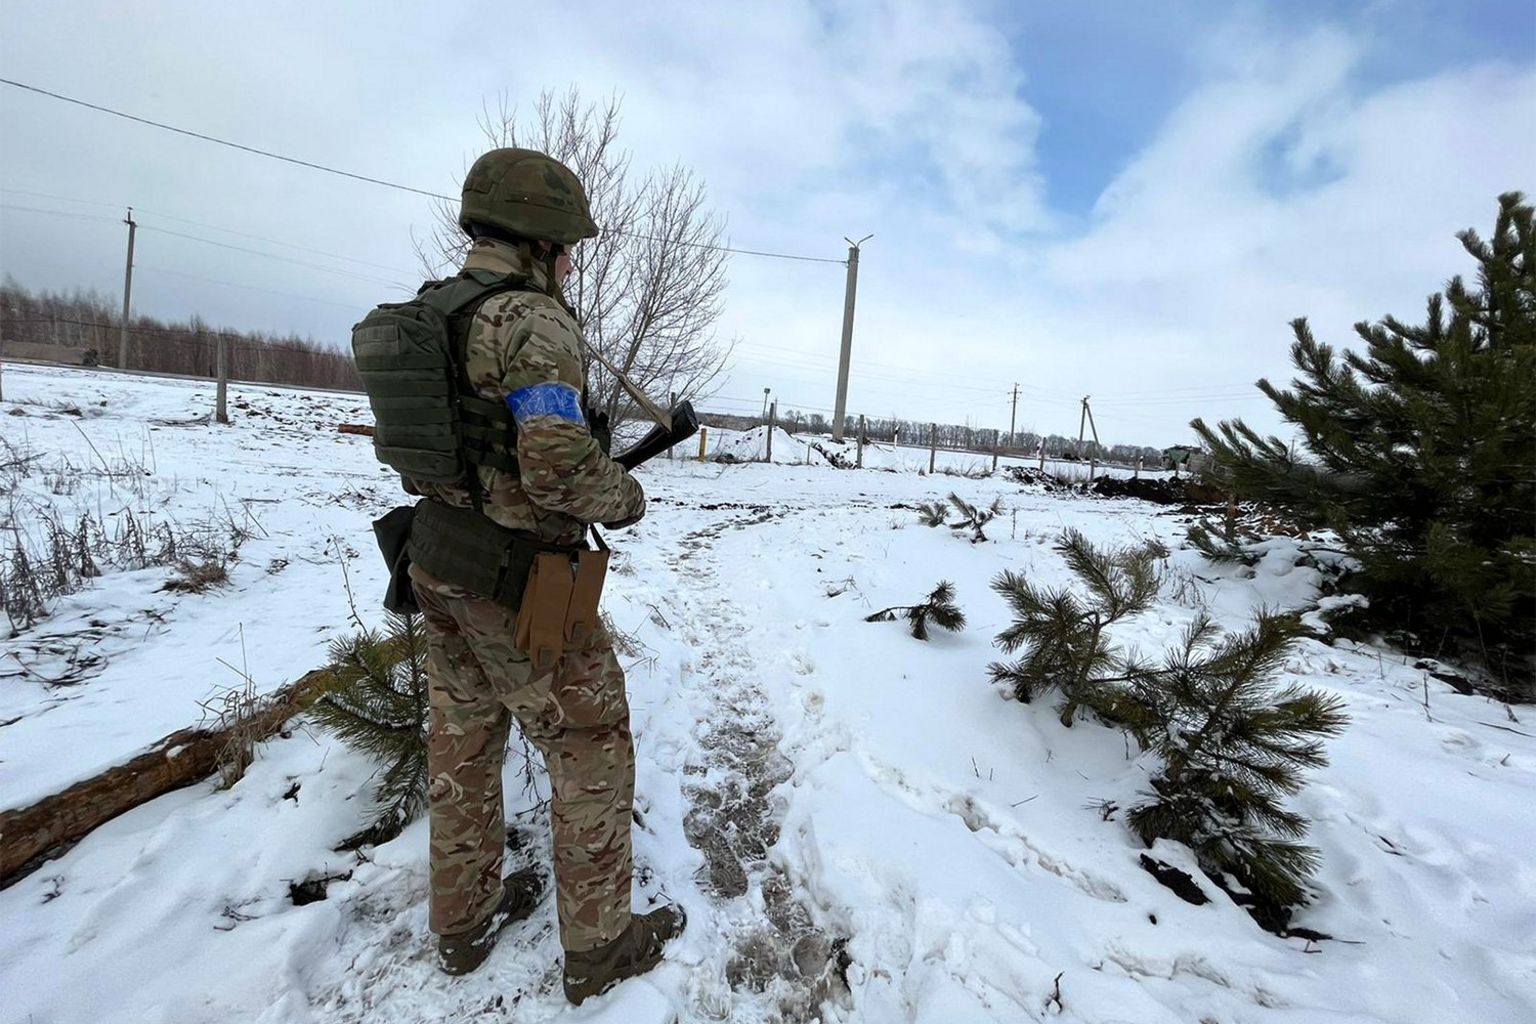 Ukrainian soldier in the snow